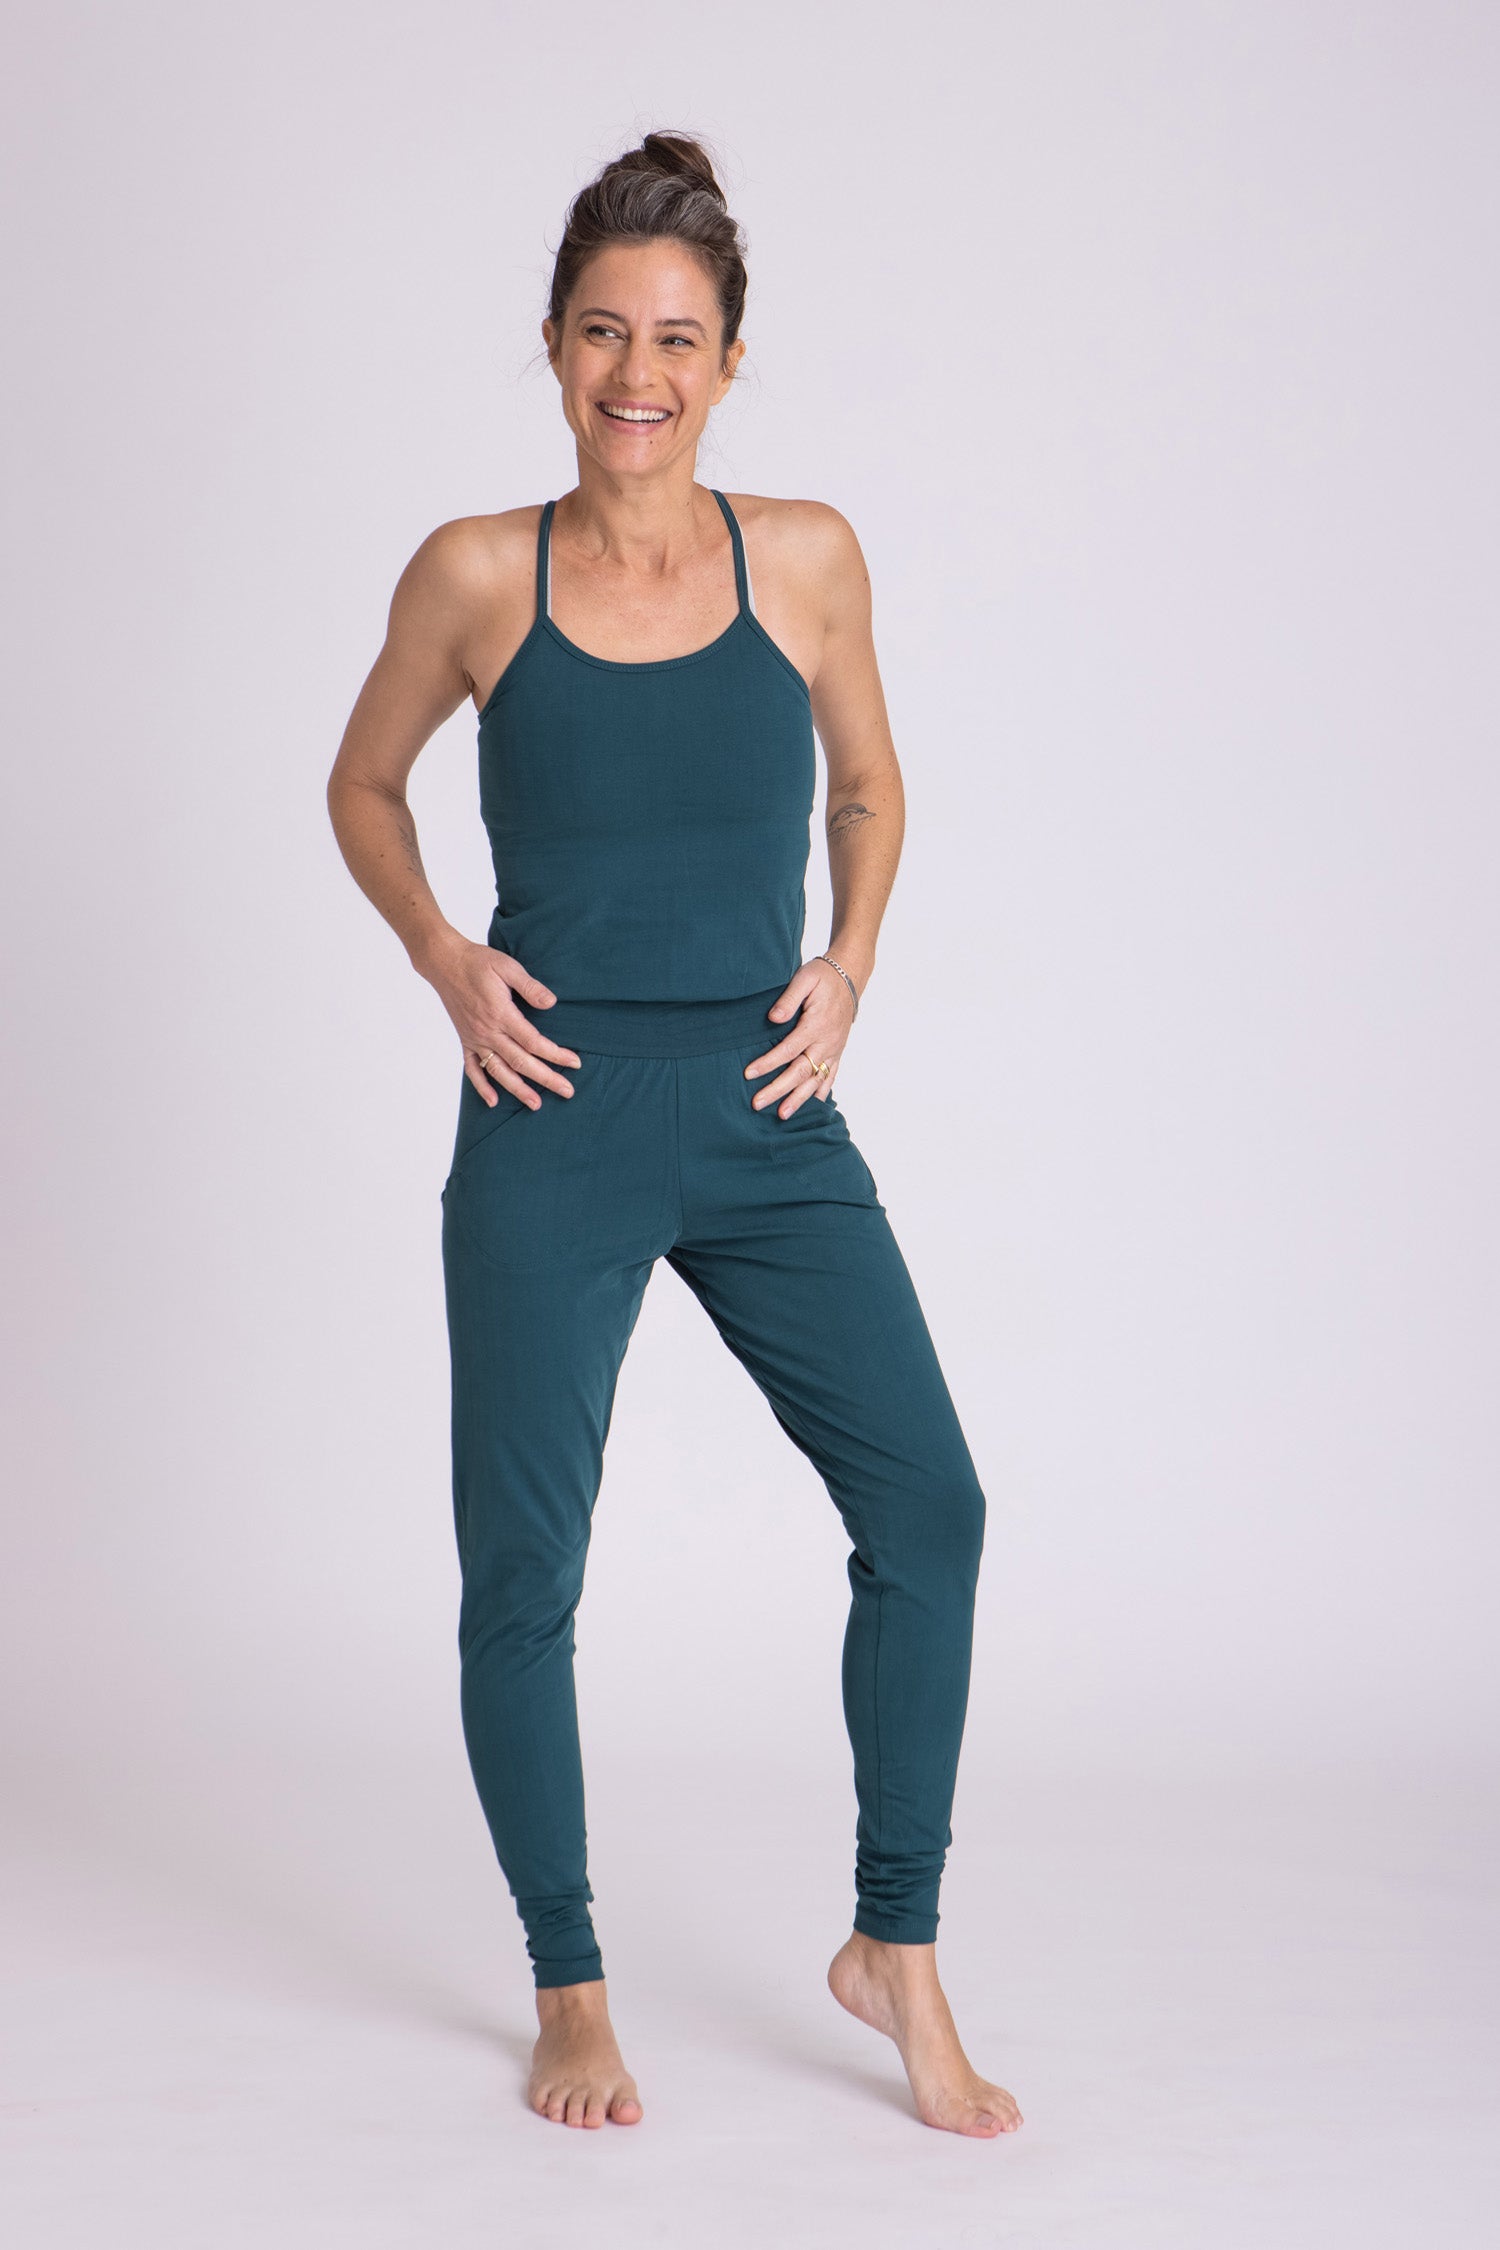 Noya Yoga womens S Capri Yogzi one piece sports bra top leggings active  jumpsuit